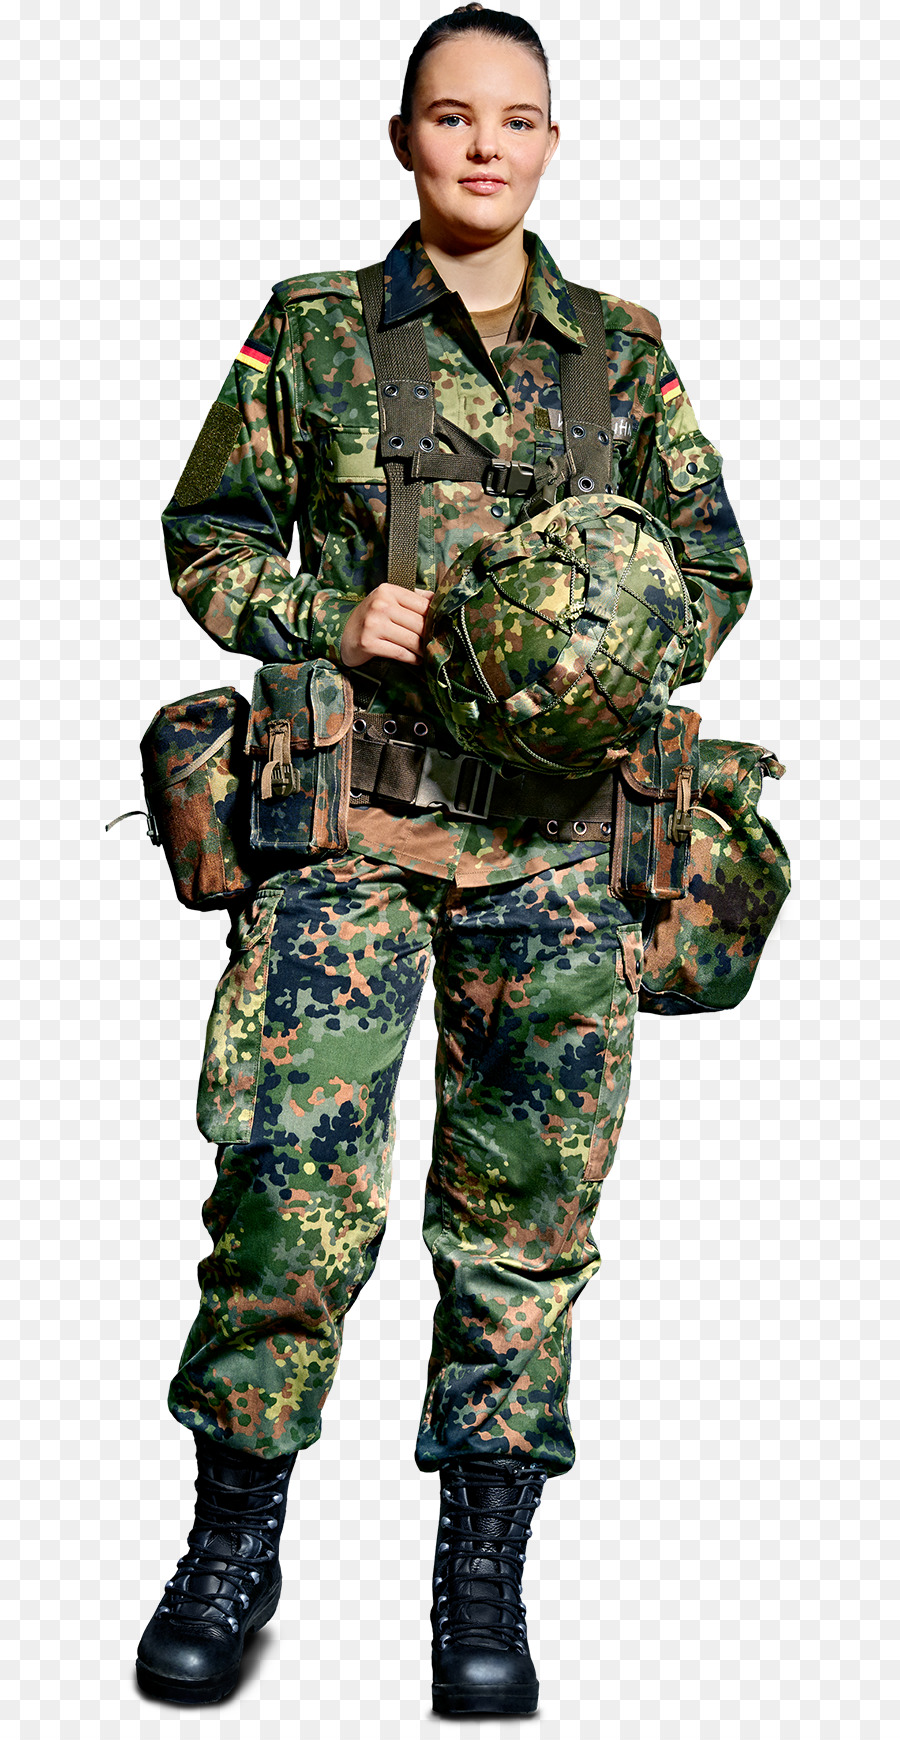 Soldato, Le Reclute Infantry Militare camouflage - soldato